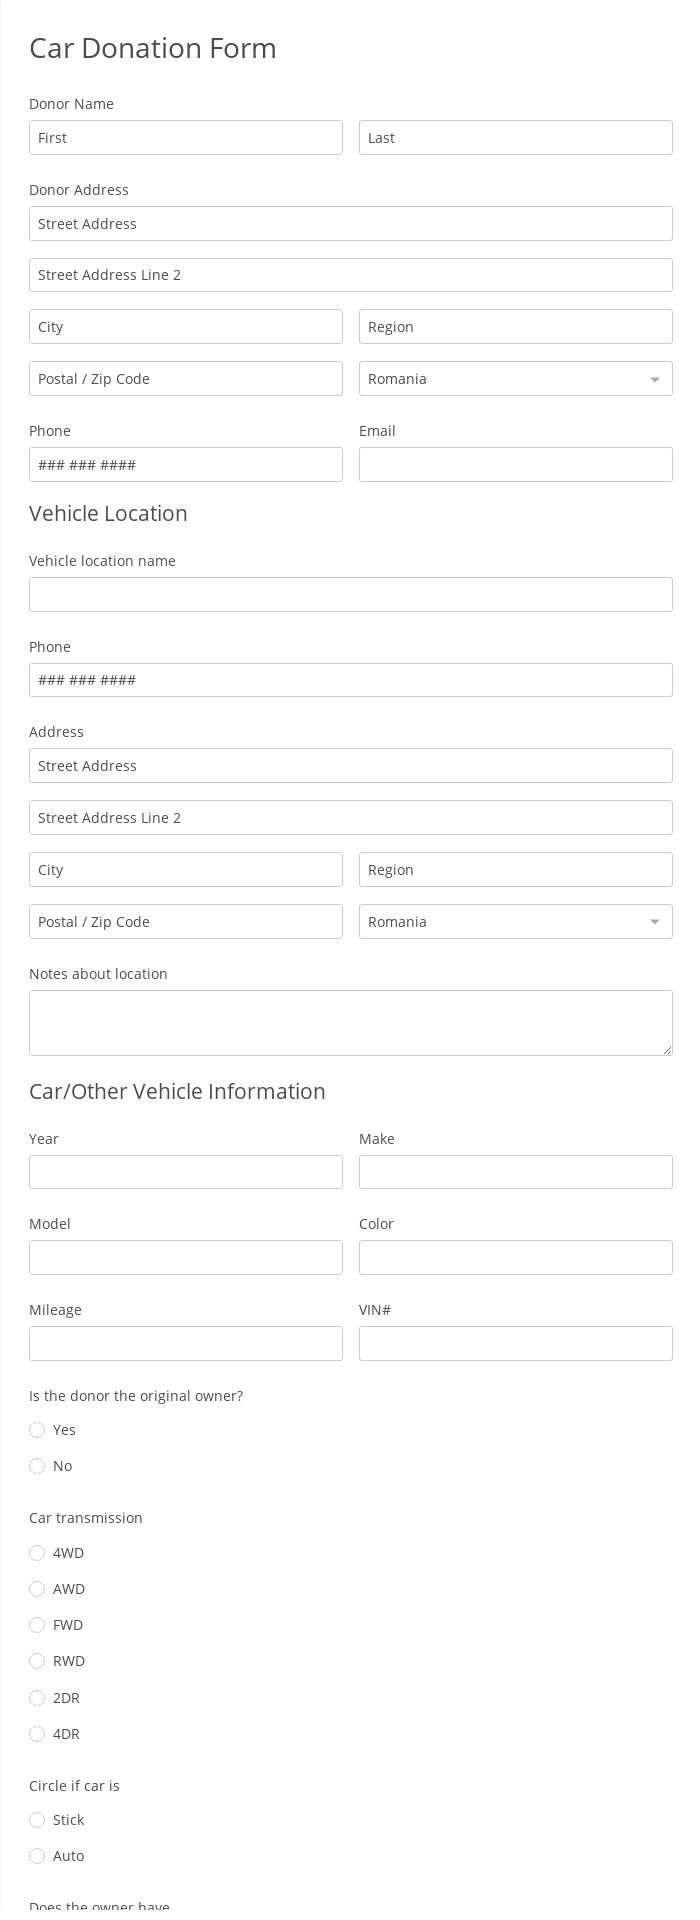 Car Donation Form